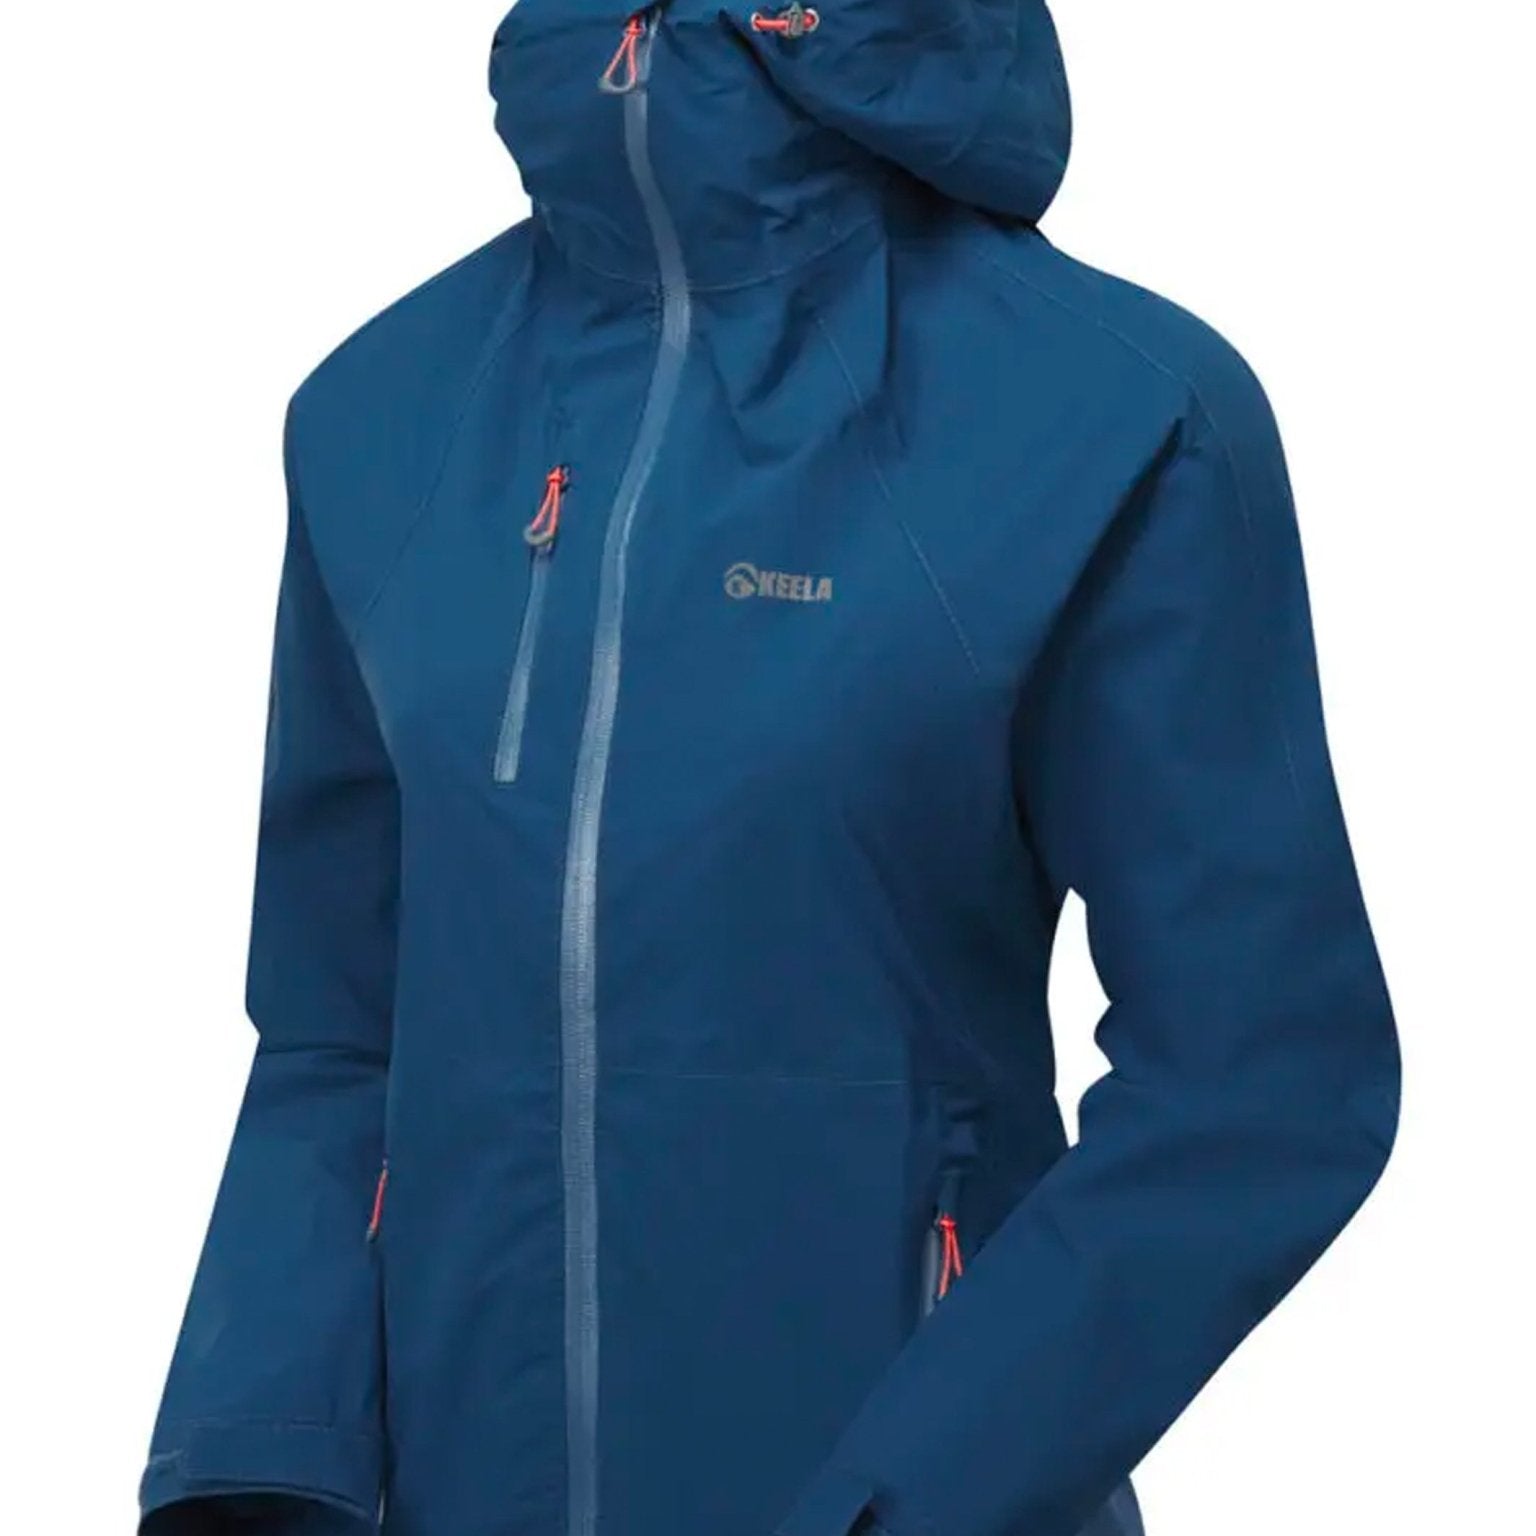 4elementsclothingKeelaKeela Outdoors - Ladies Storm Waterproof Jacket - Lightweight, breathable waterproof Womens coatOuterwear40030-513000-0-210